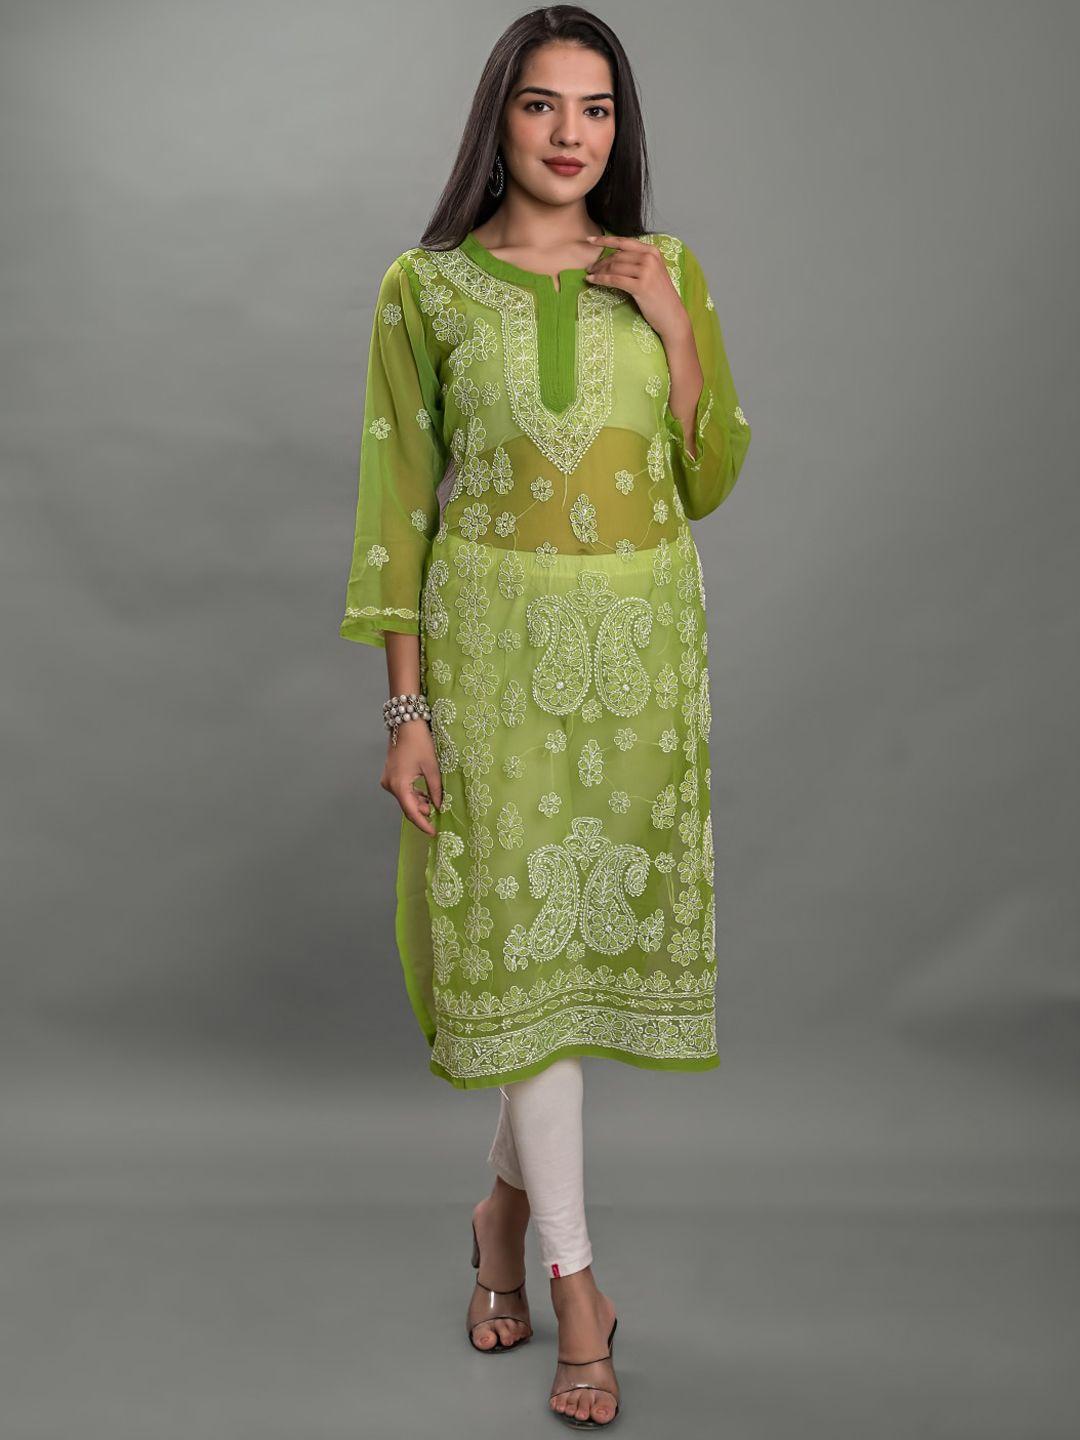 apratim-green-&-white-ethnic-motifs-embroidered-chikankari-georgette-kurta